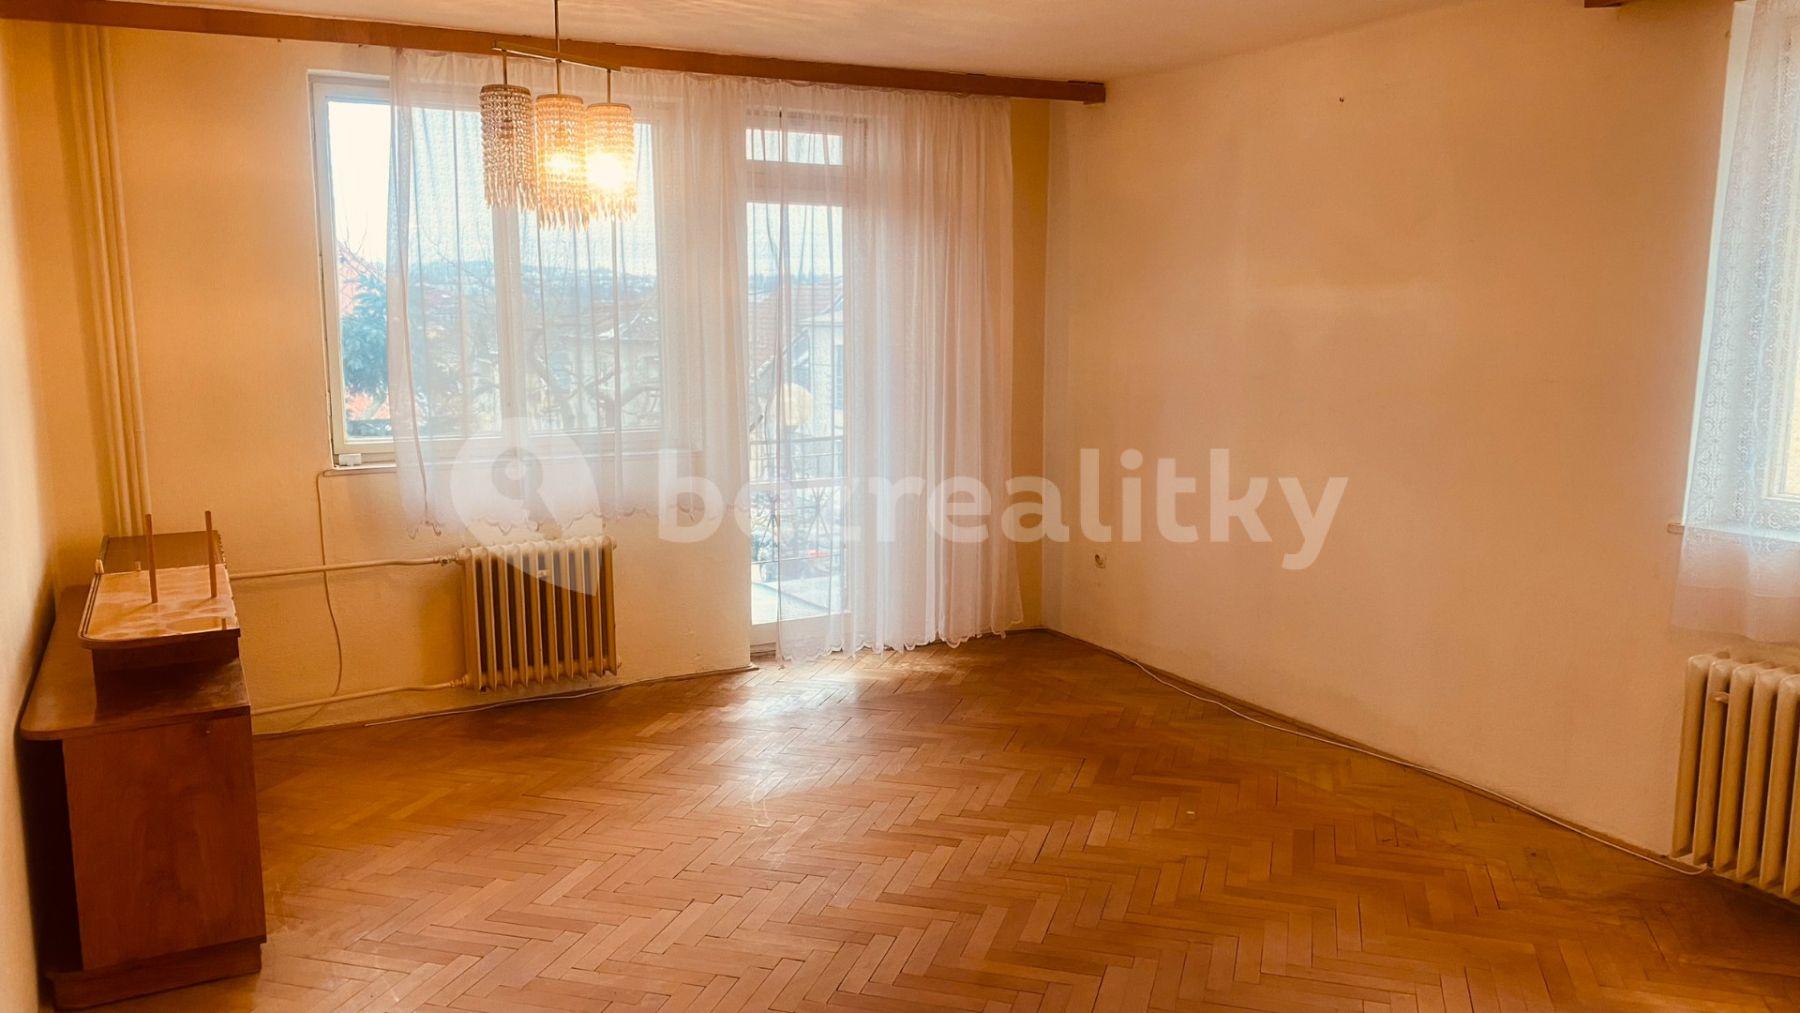 Prodej domu 285 m², pozemek 914 m², Fügnerova, Jihlava, Kraj Vysočina